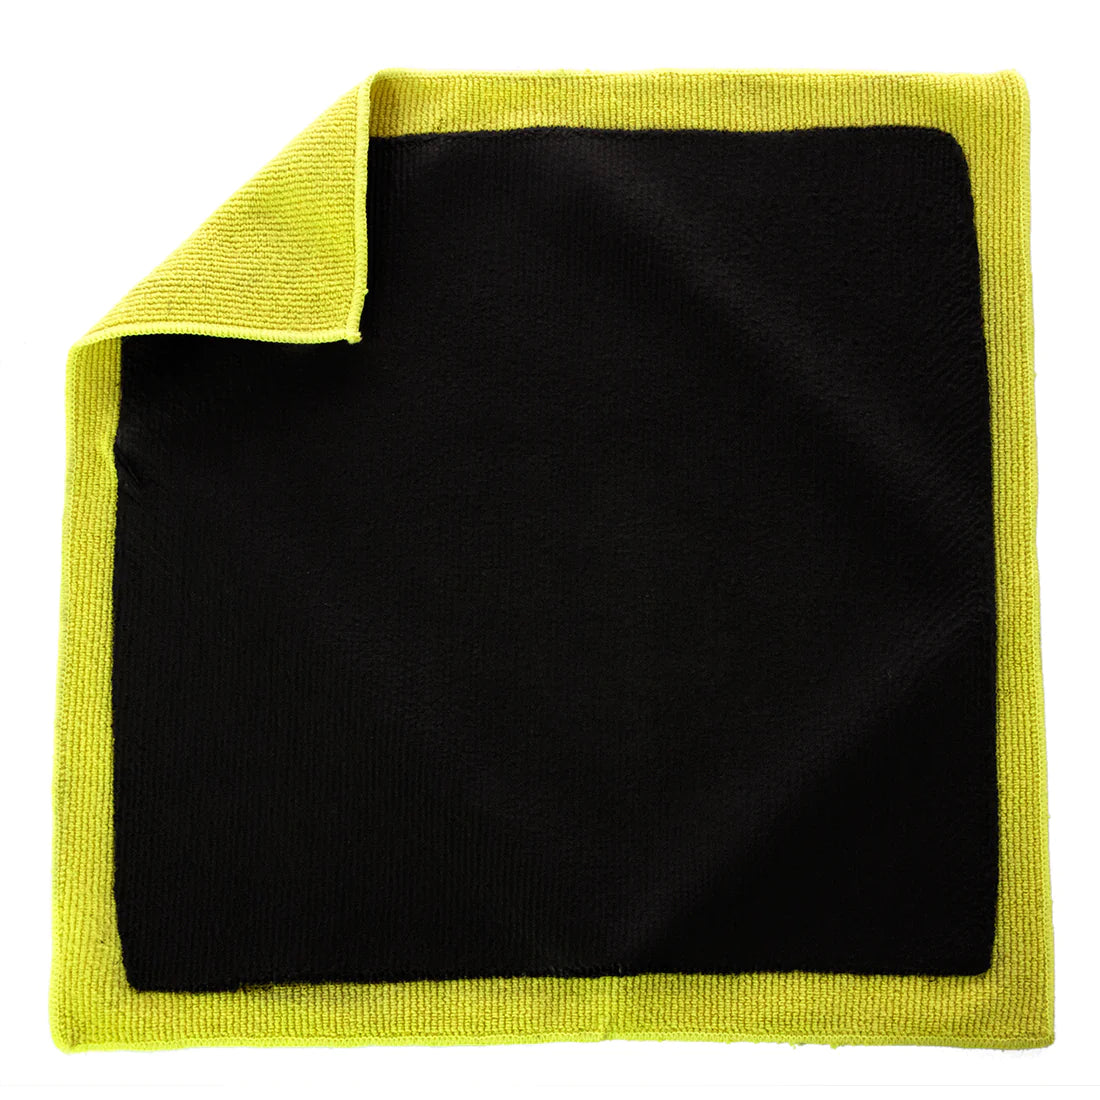 NANOSKIN | Autoscrub Medium Clay Towel